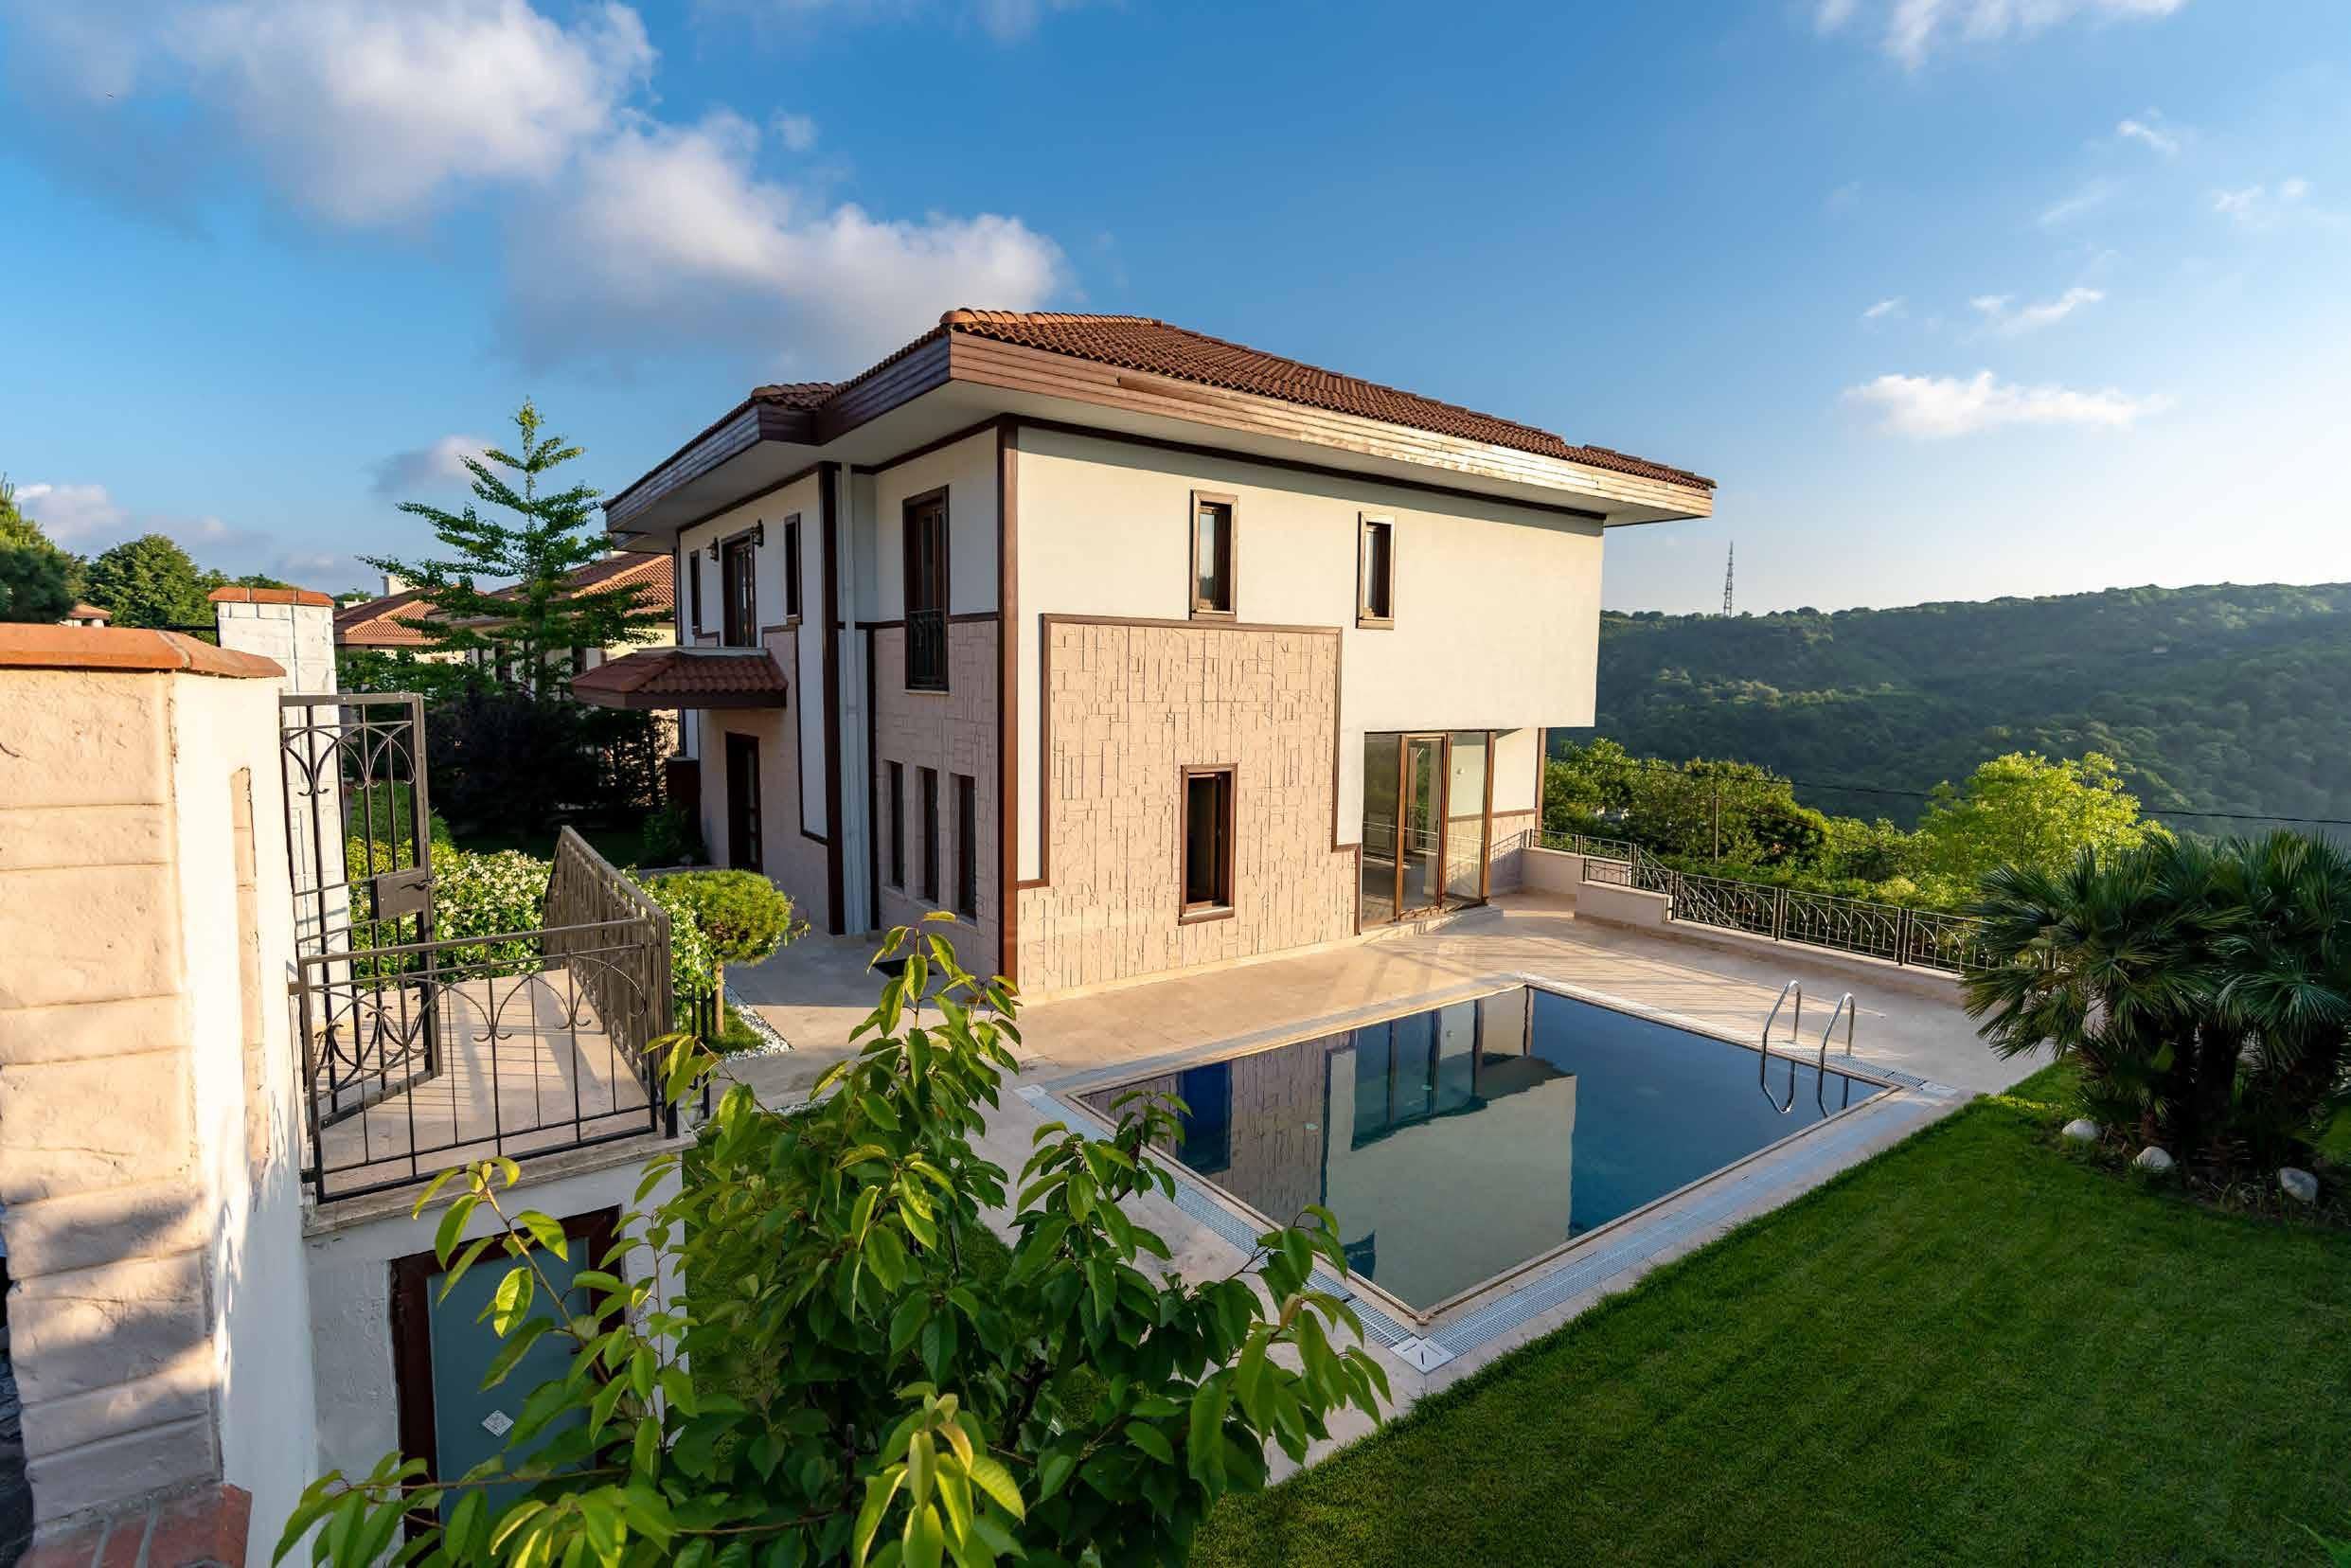 New villas in a prestigious Istanbul district - Sariyer